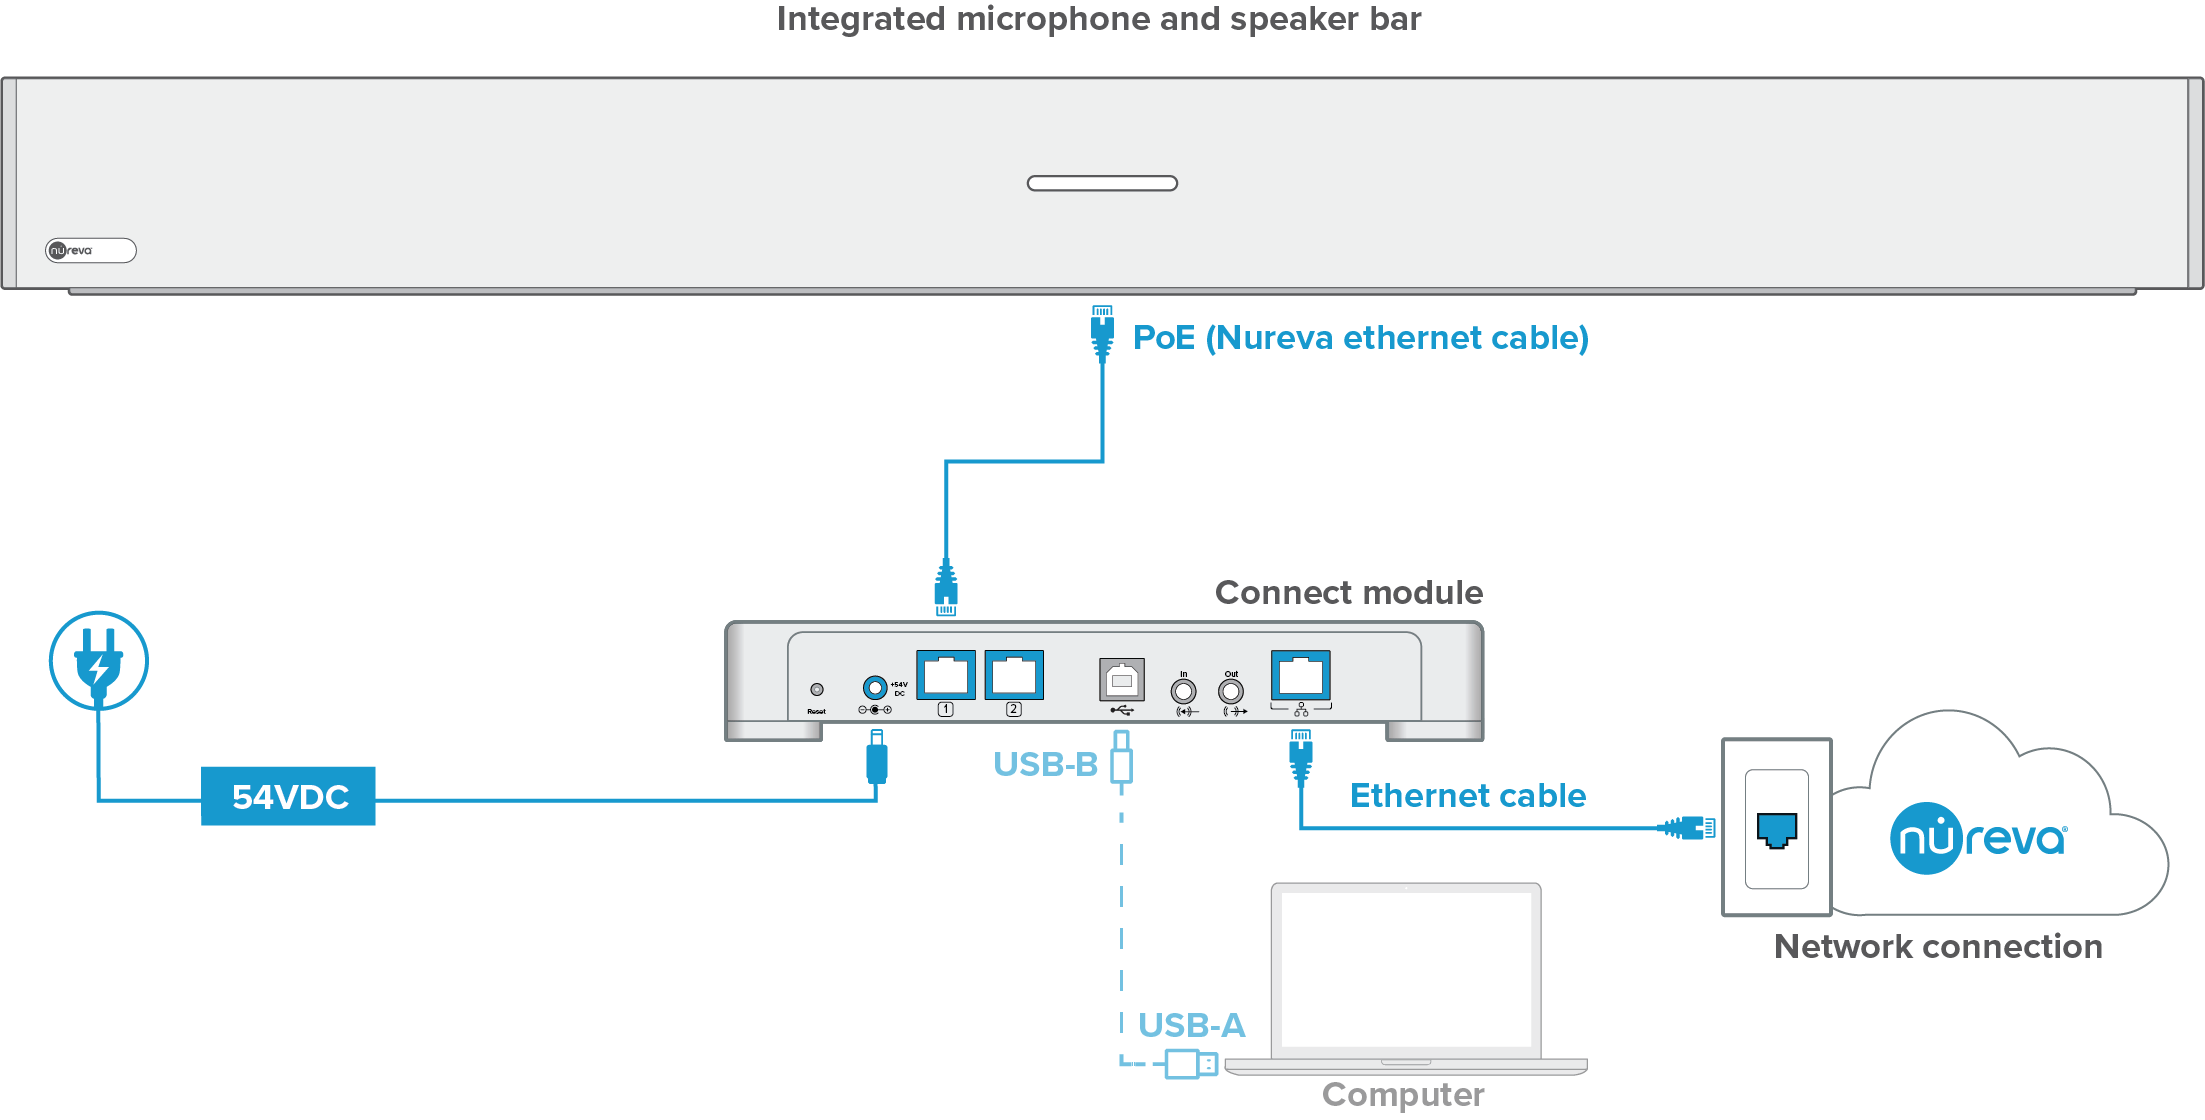 HDL310 connection diagram_04.24